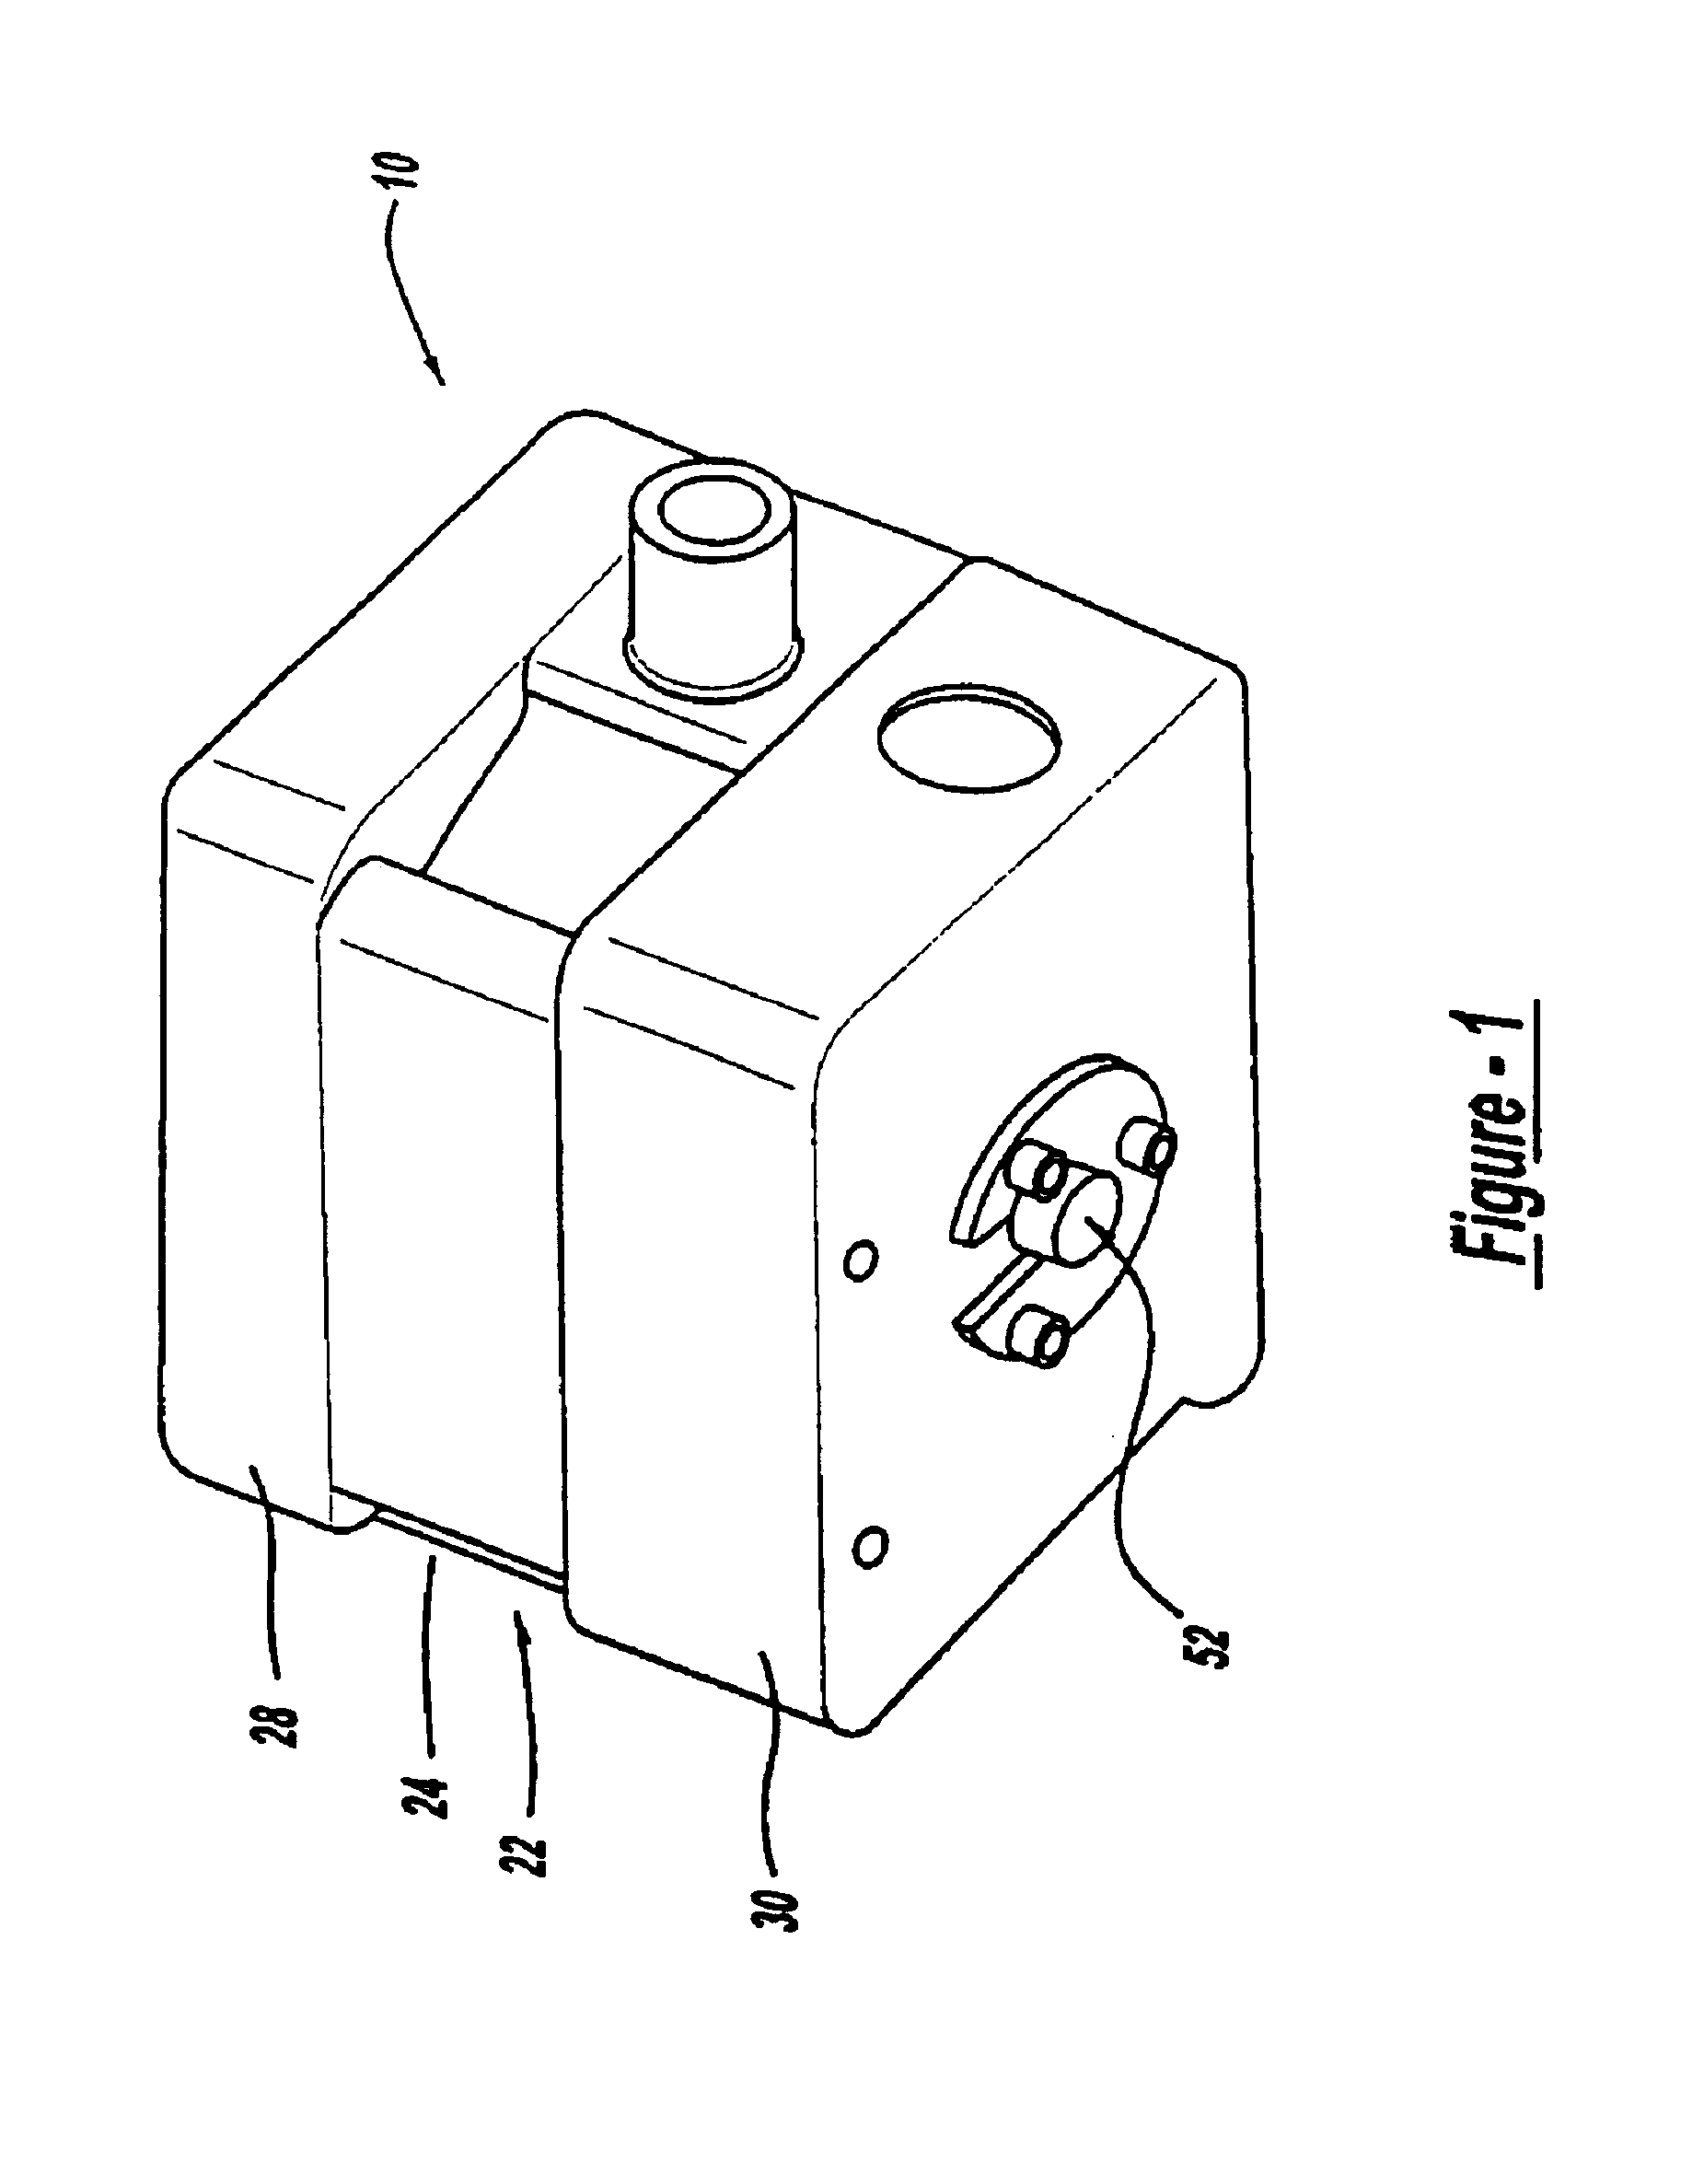 Variable displacement vane pump with variable target regulator